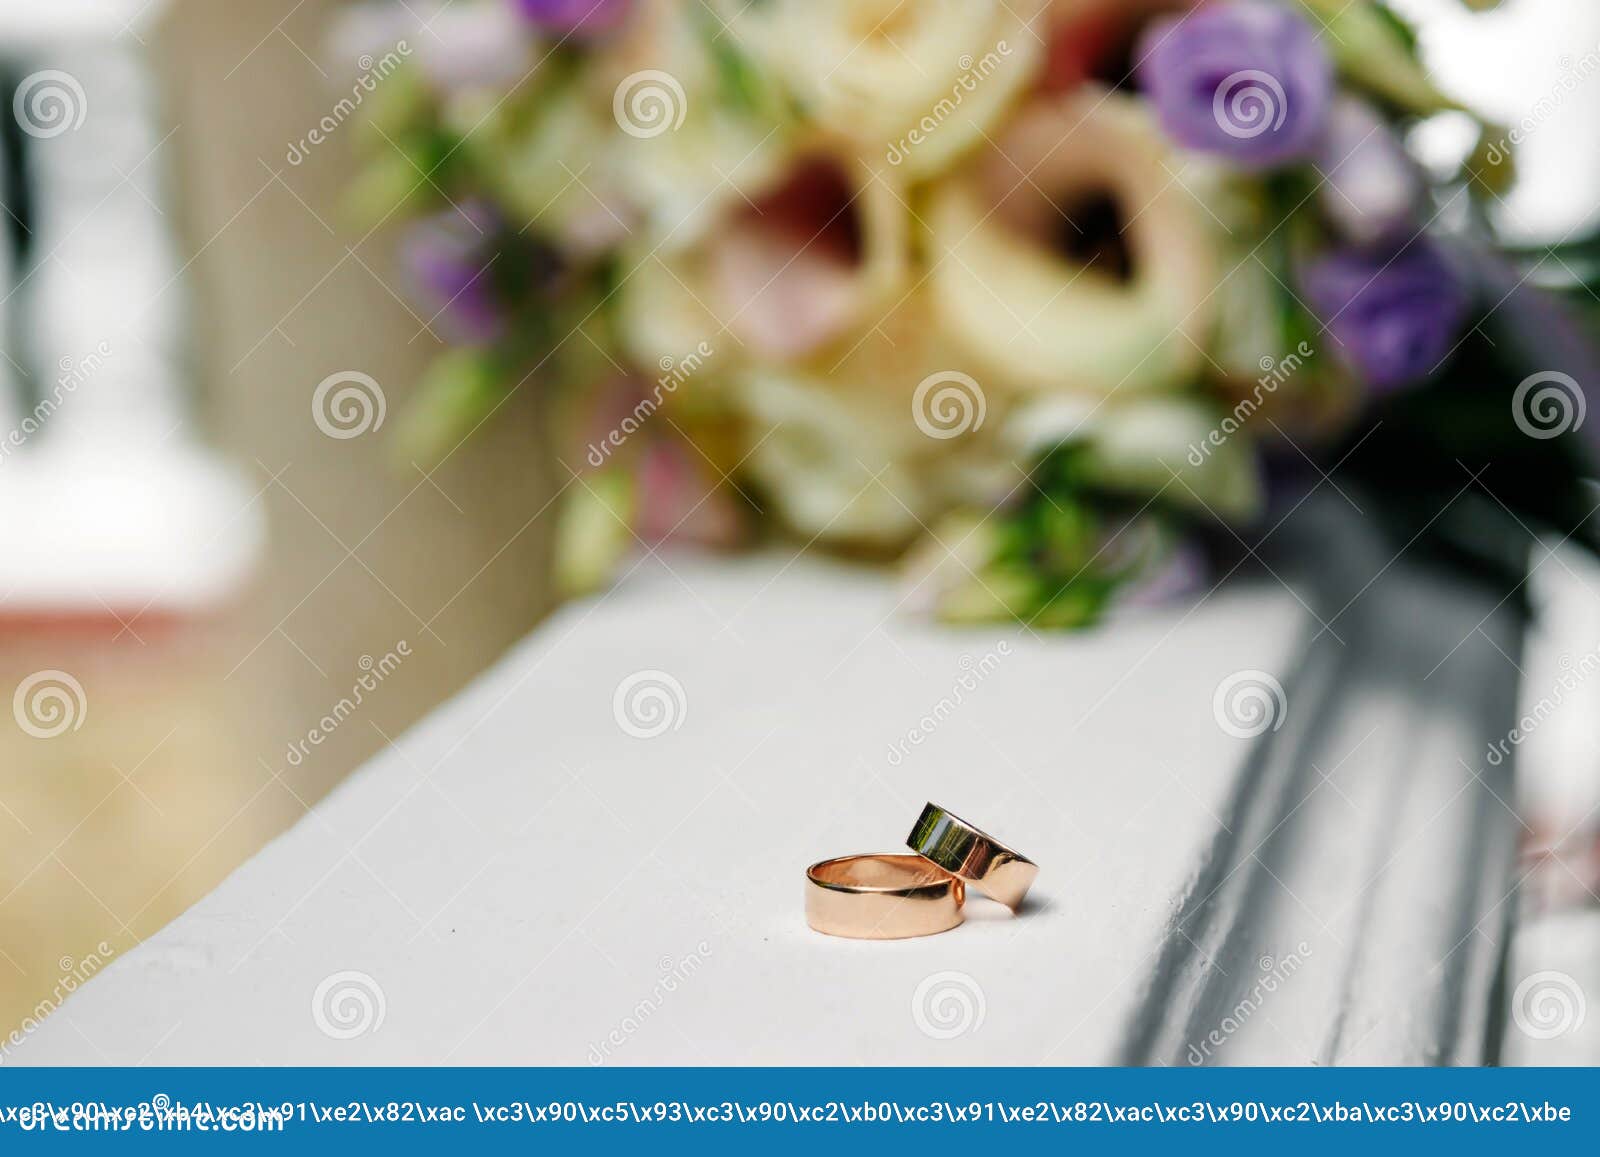 Gold Wedding Rings on Purple Beautiful Flowers Stock Image - Image of ...